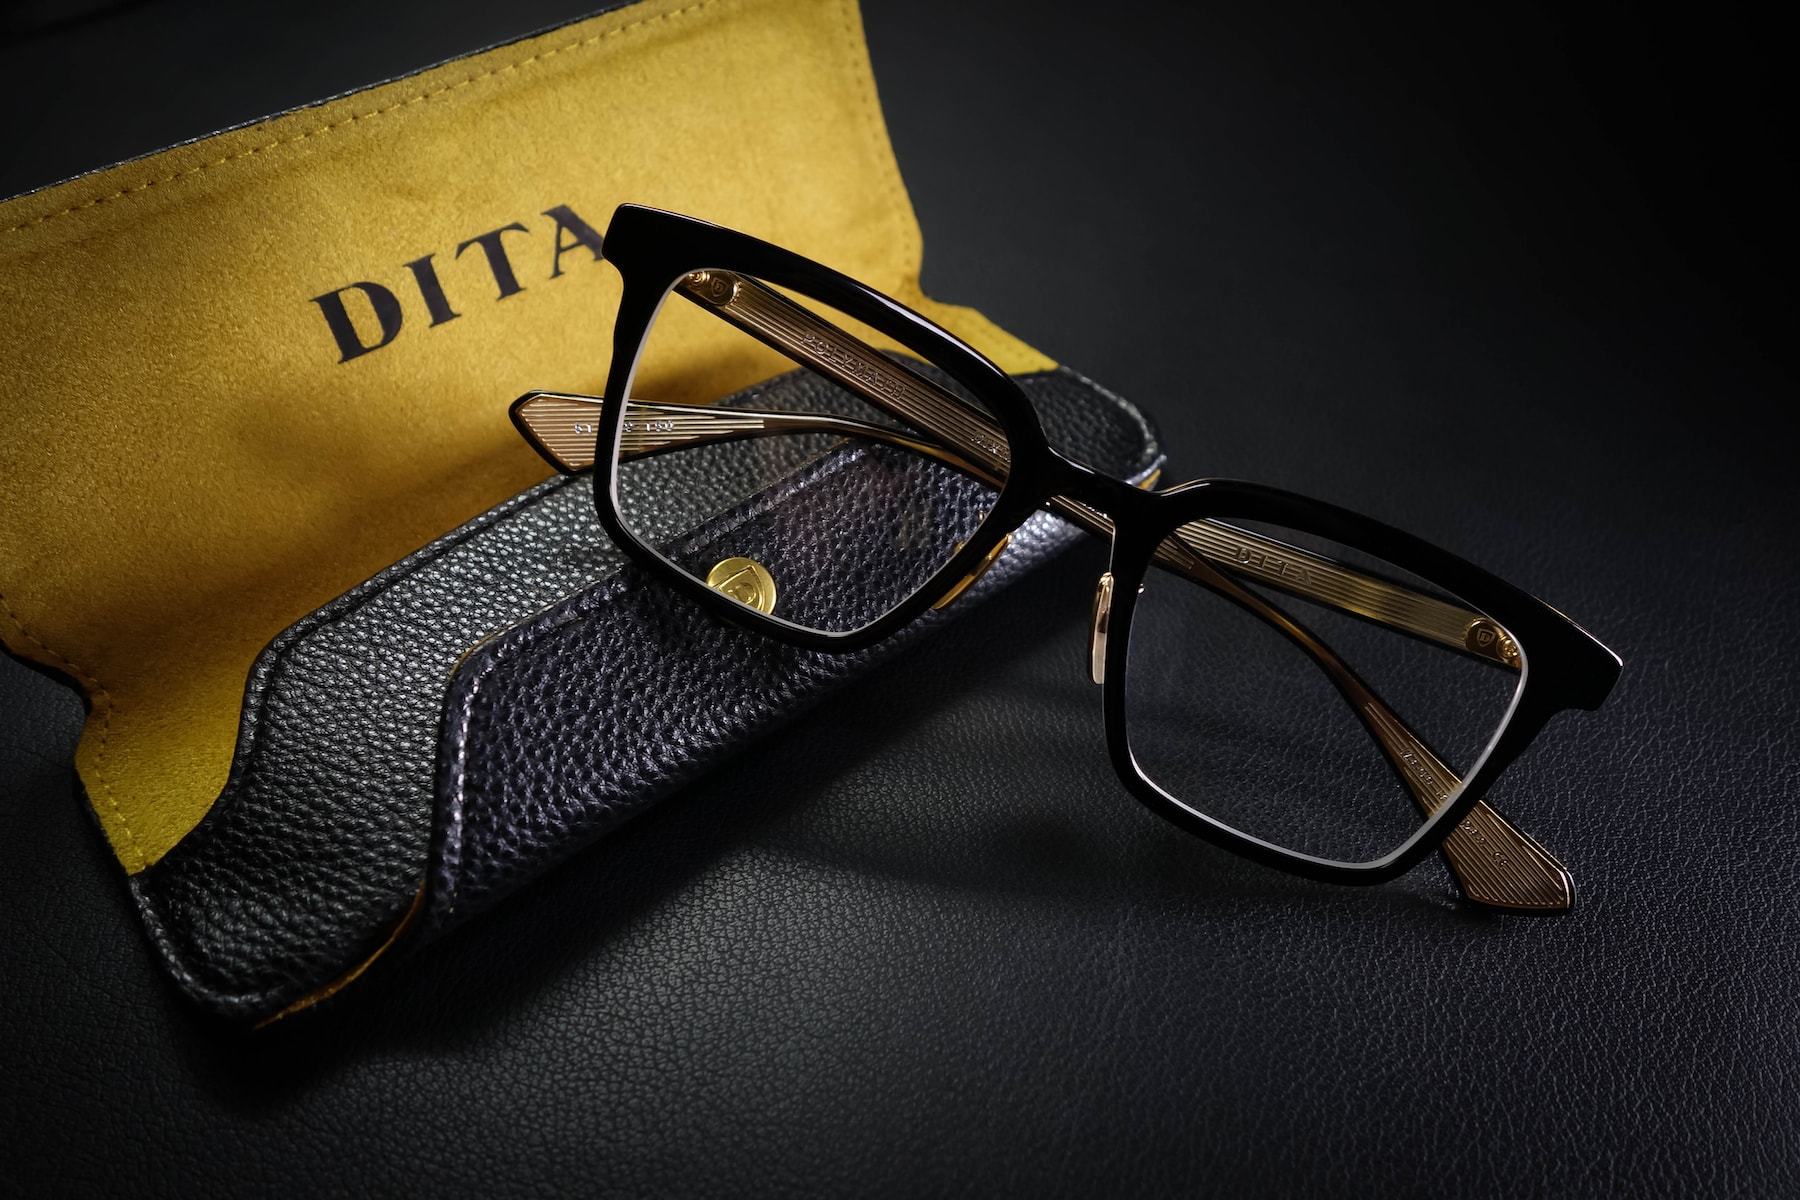 DITA 2017 全新 Mido 眼鏡系列